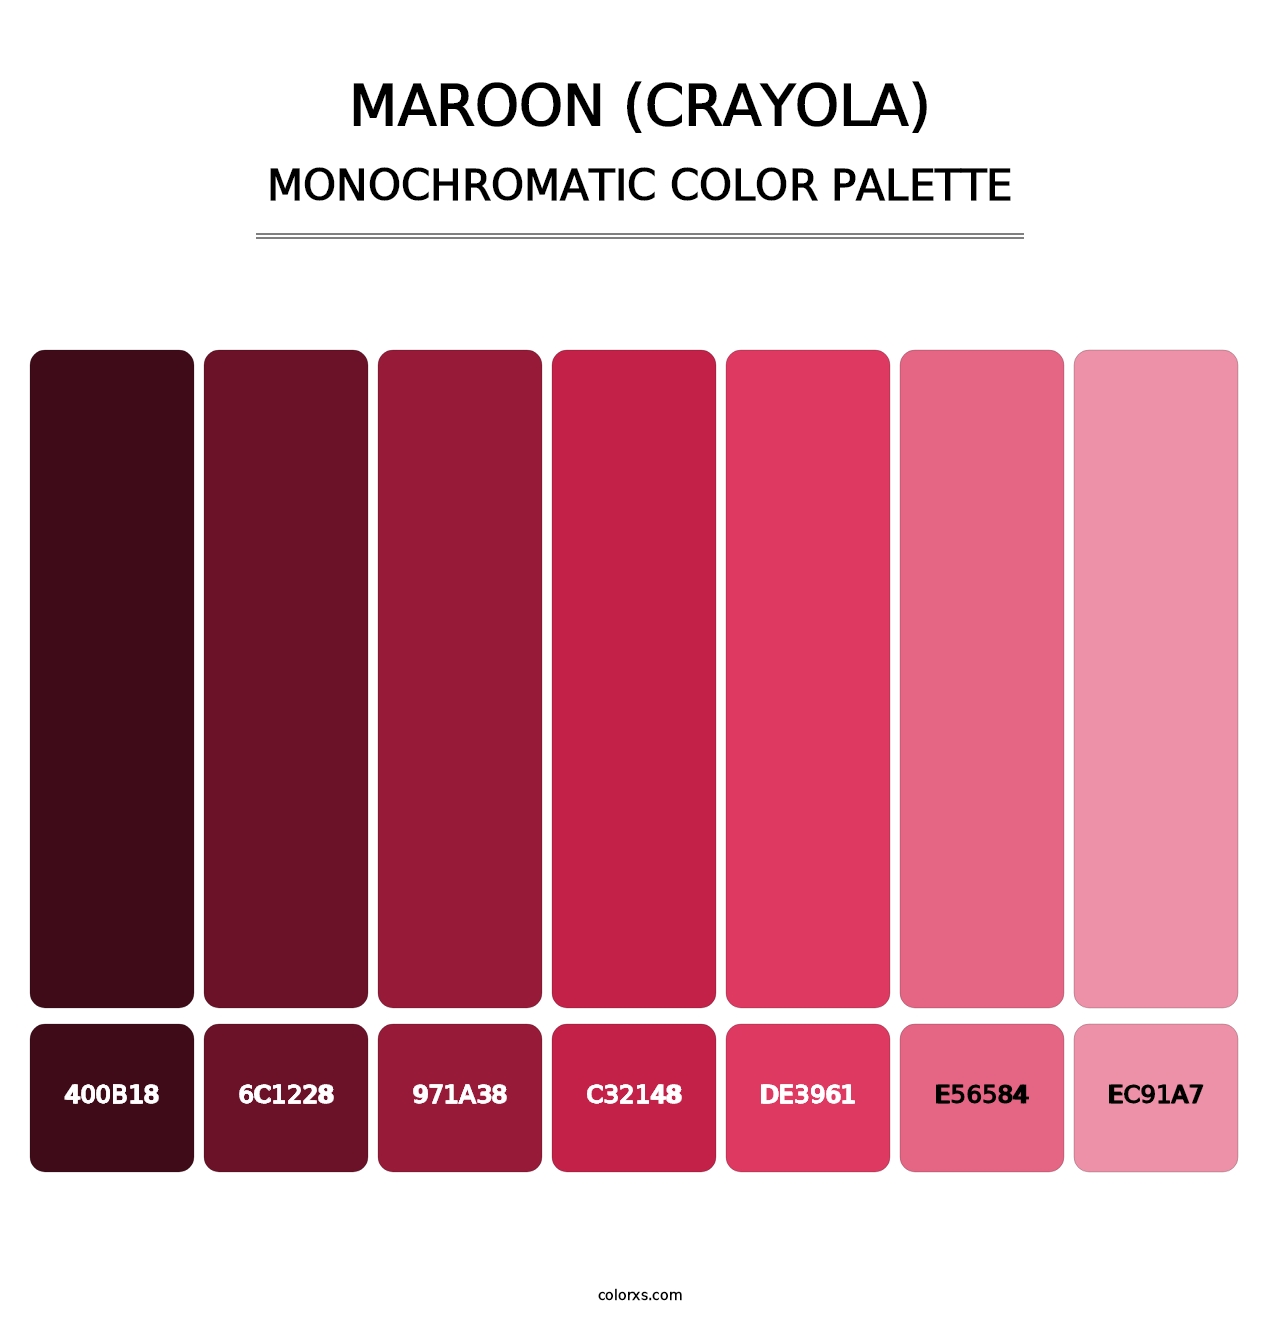 Maroon (Crayola) - Monochromatic Color Palette